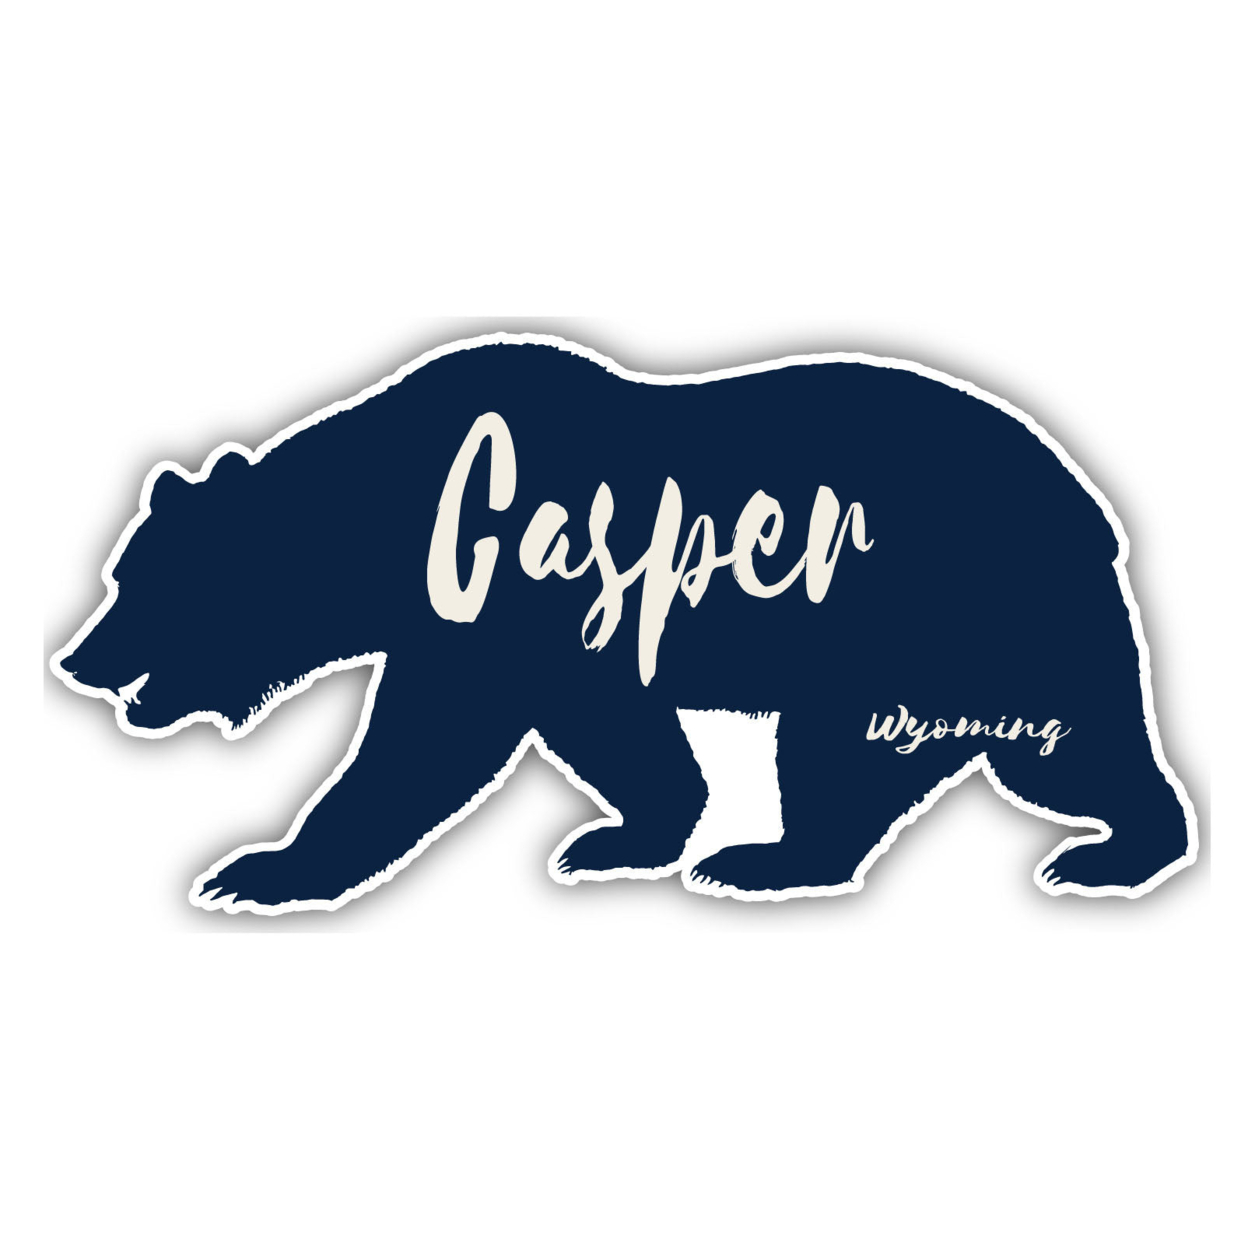 Casper Wyoming Souvenir Decorative Stickers (Choose Theme And Size) - Single Unit, 8-Inch, Tent